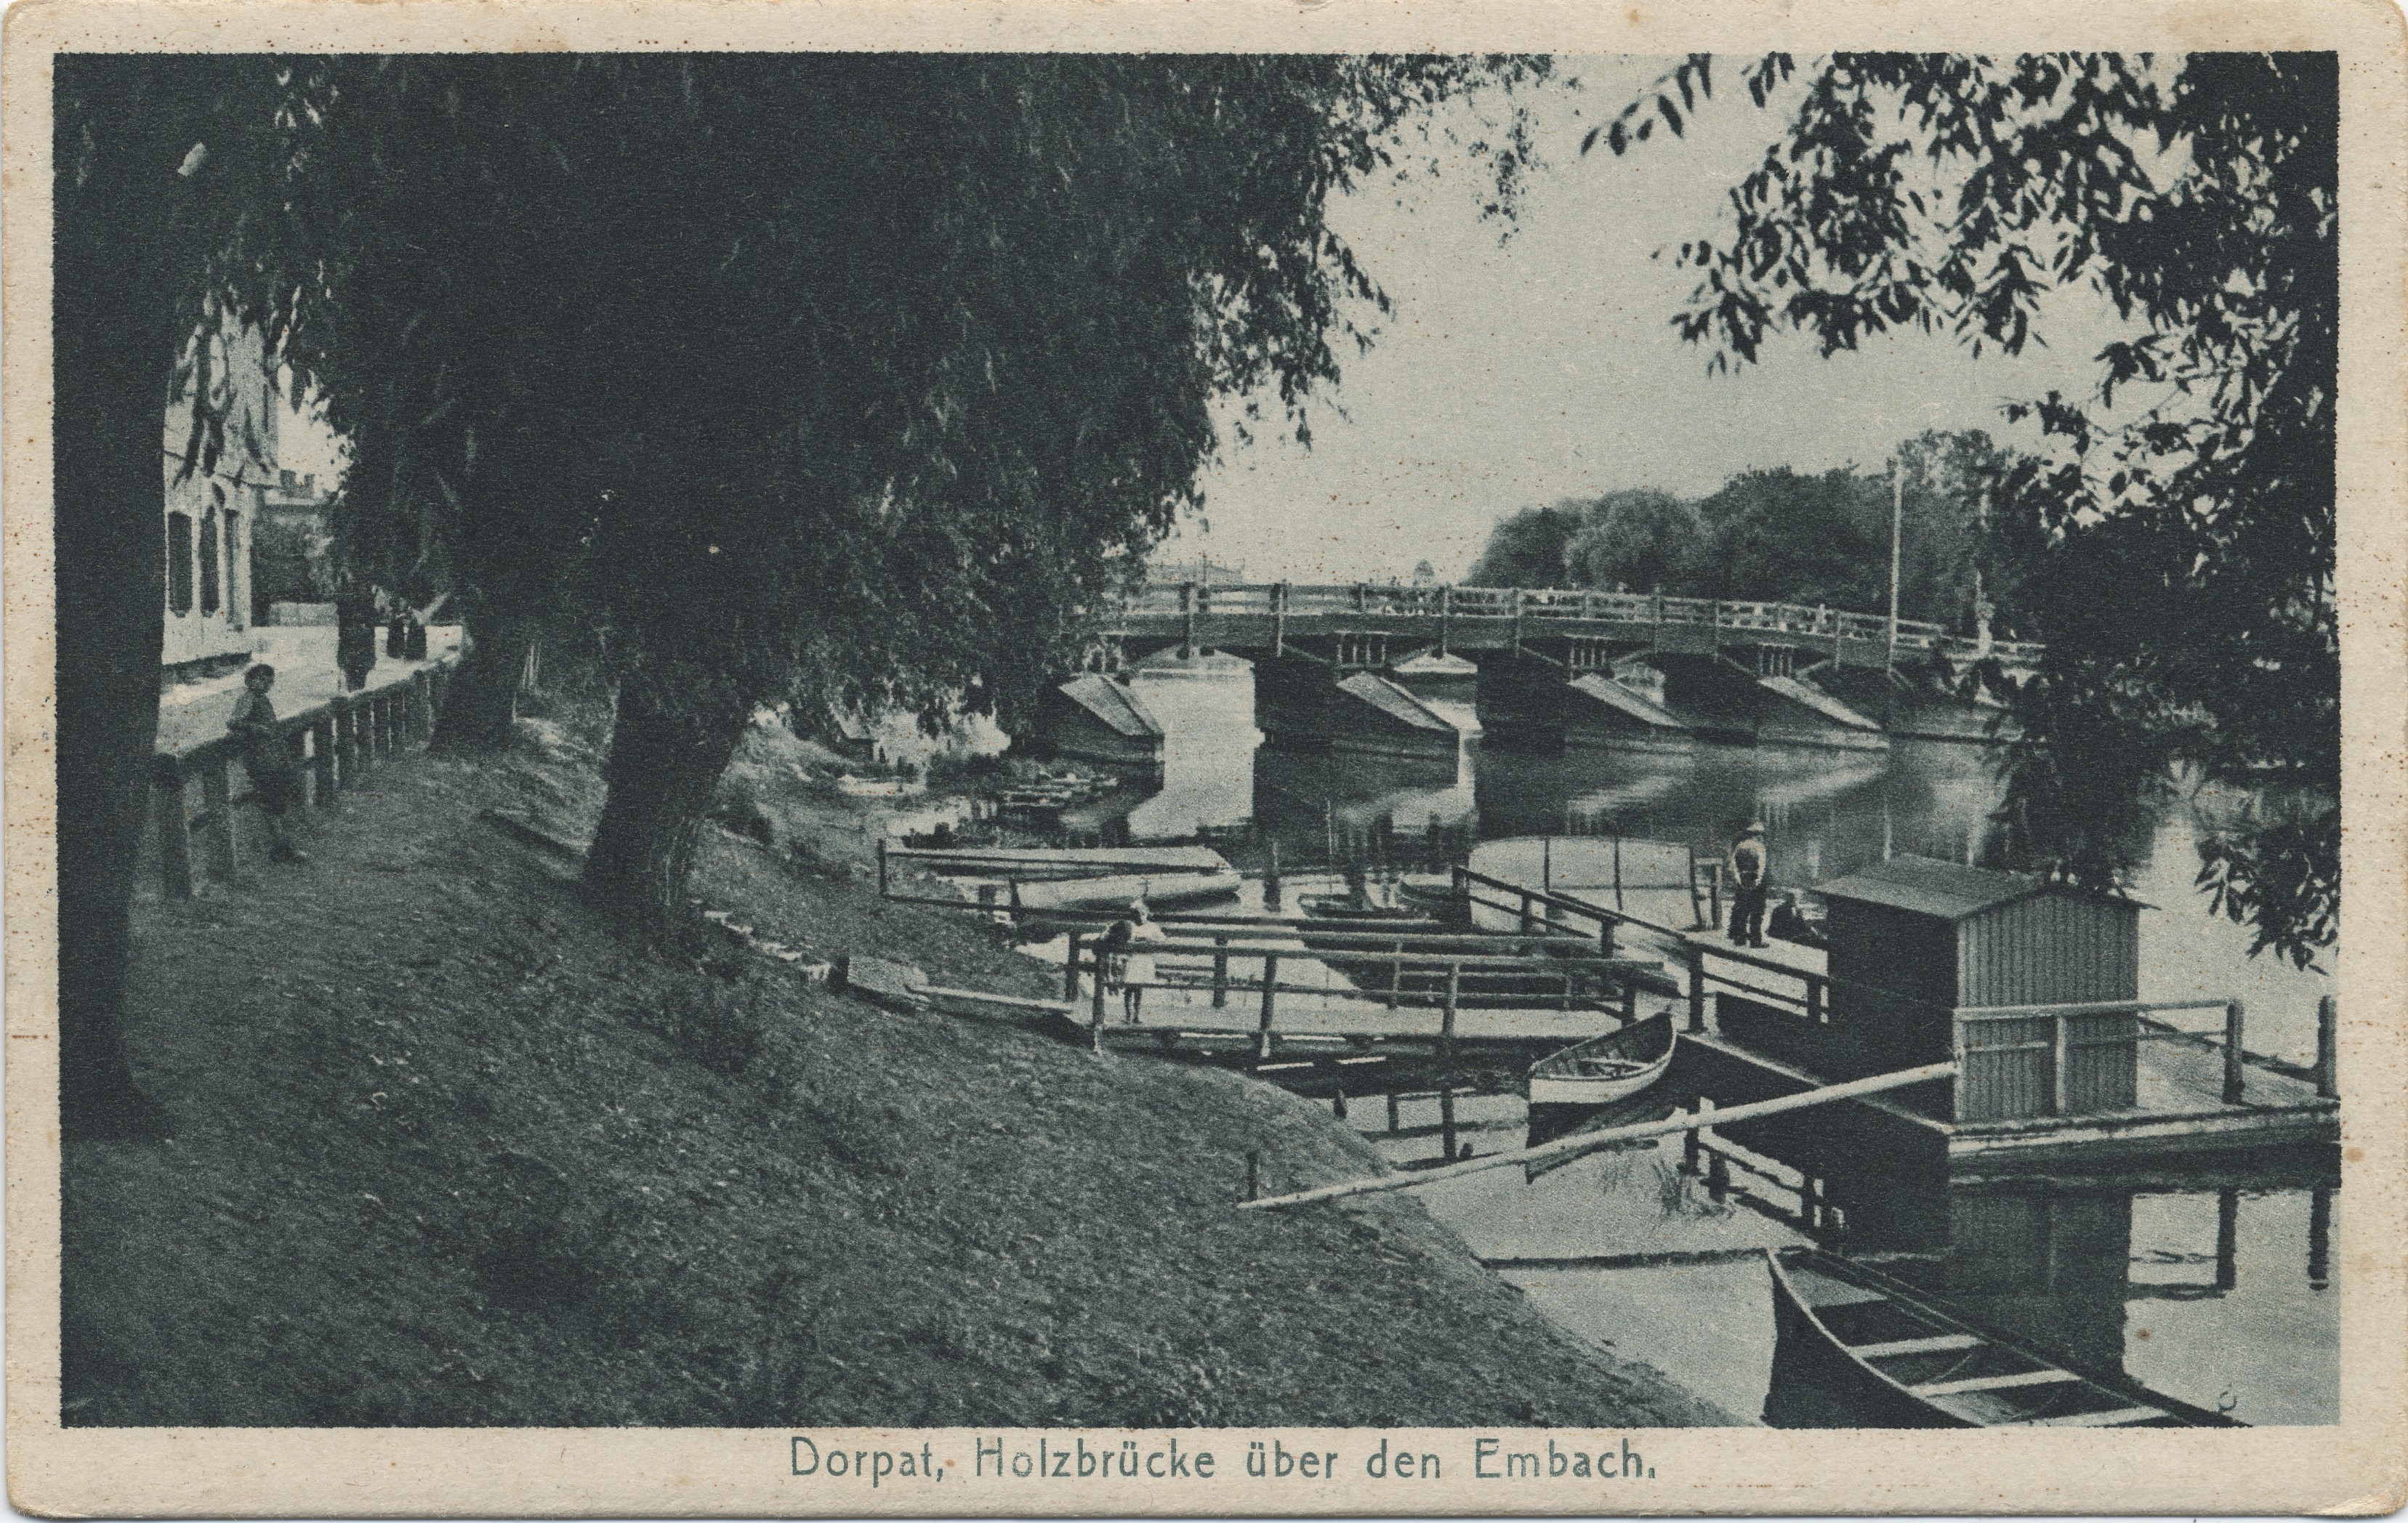 Dorpat : Wood bridge over the Embach